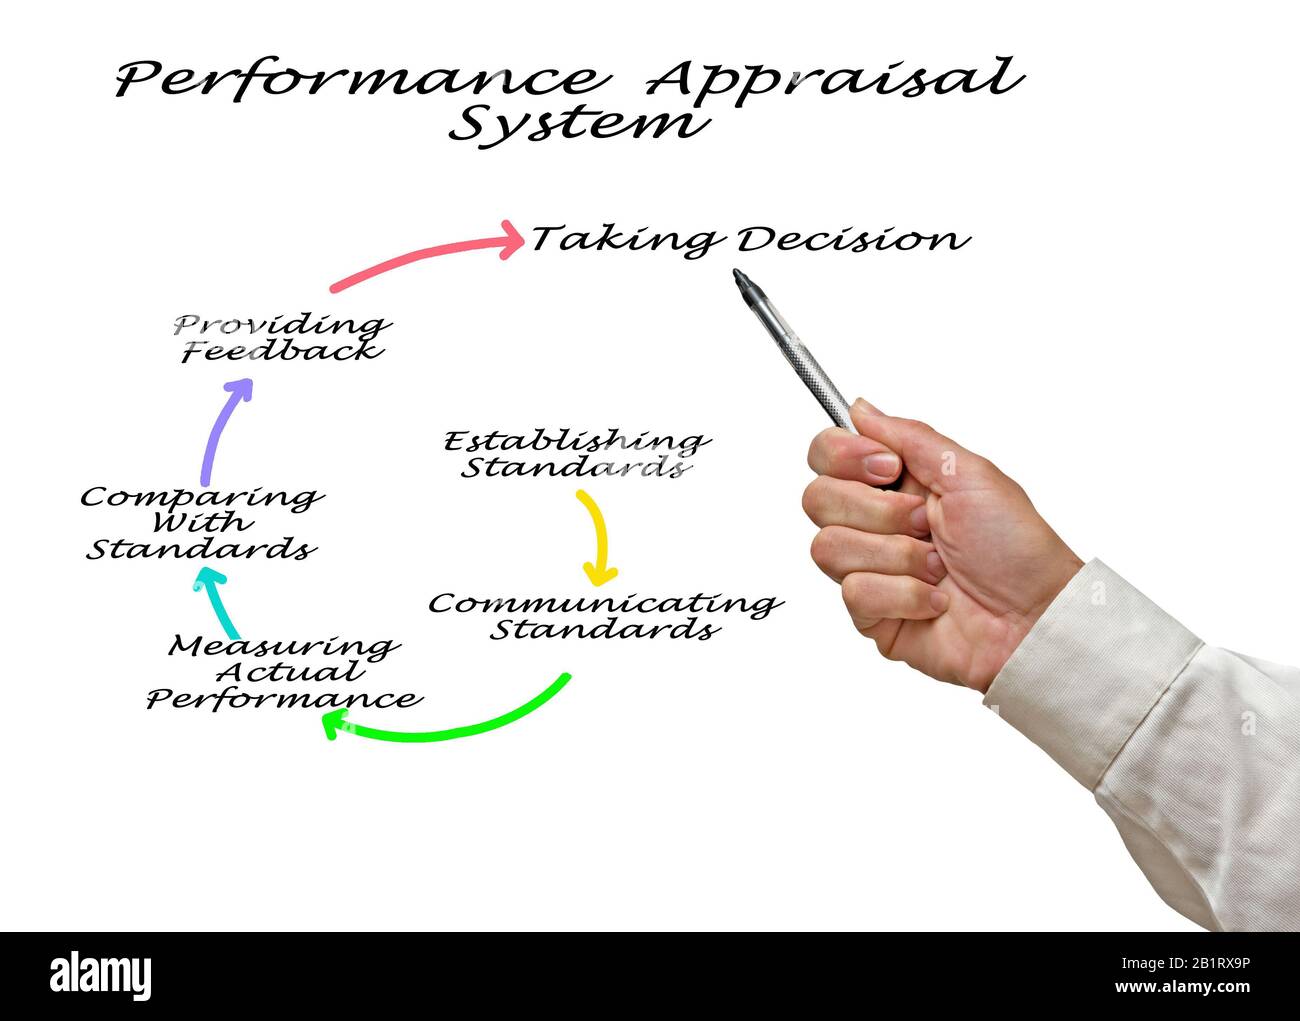 Performance Appraisal Stock Photos Performance Appraisal Stock